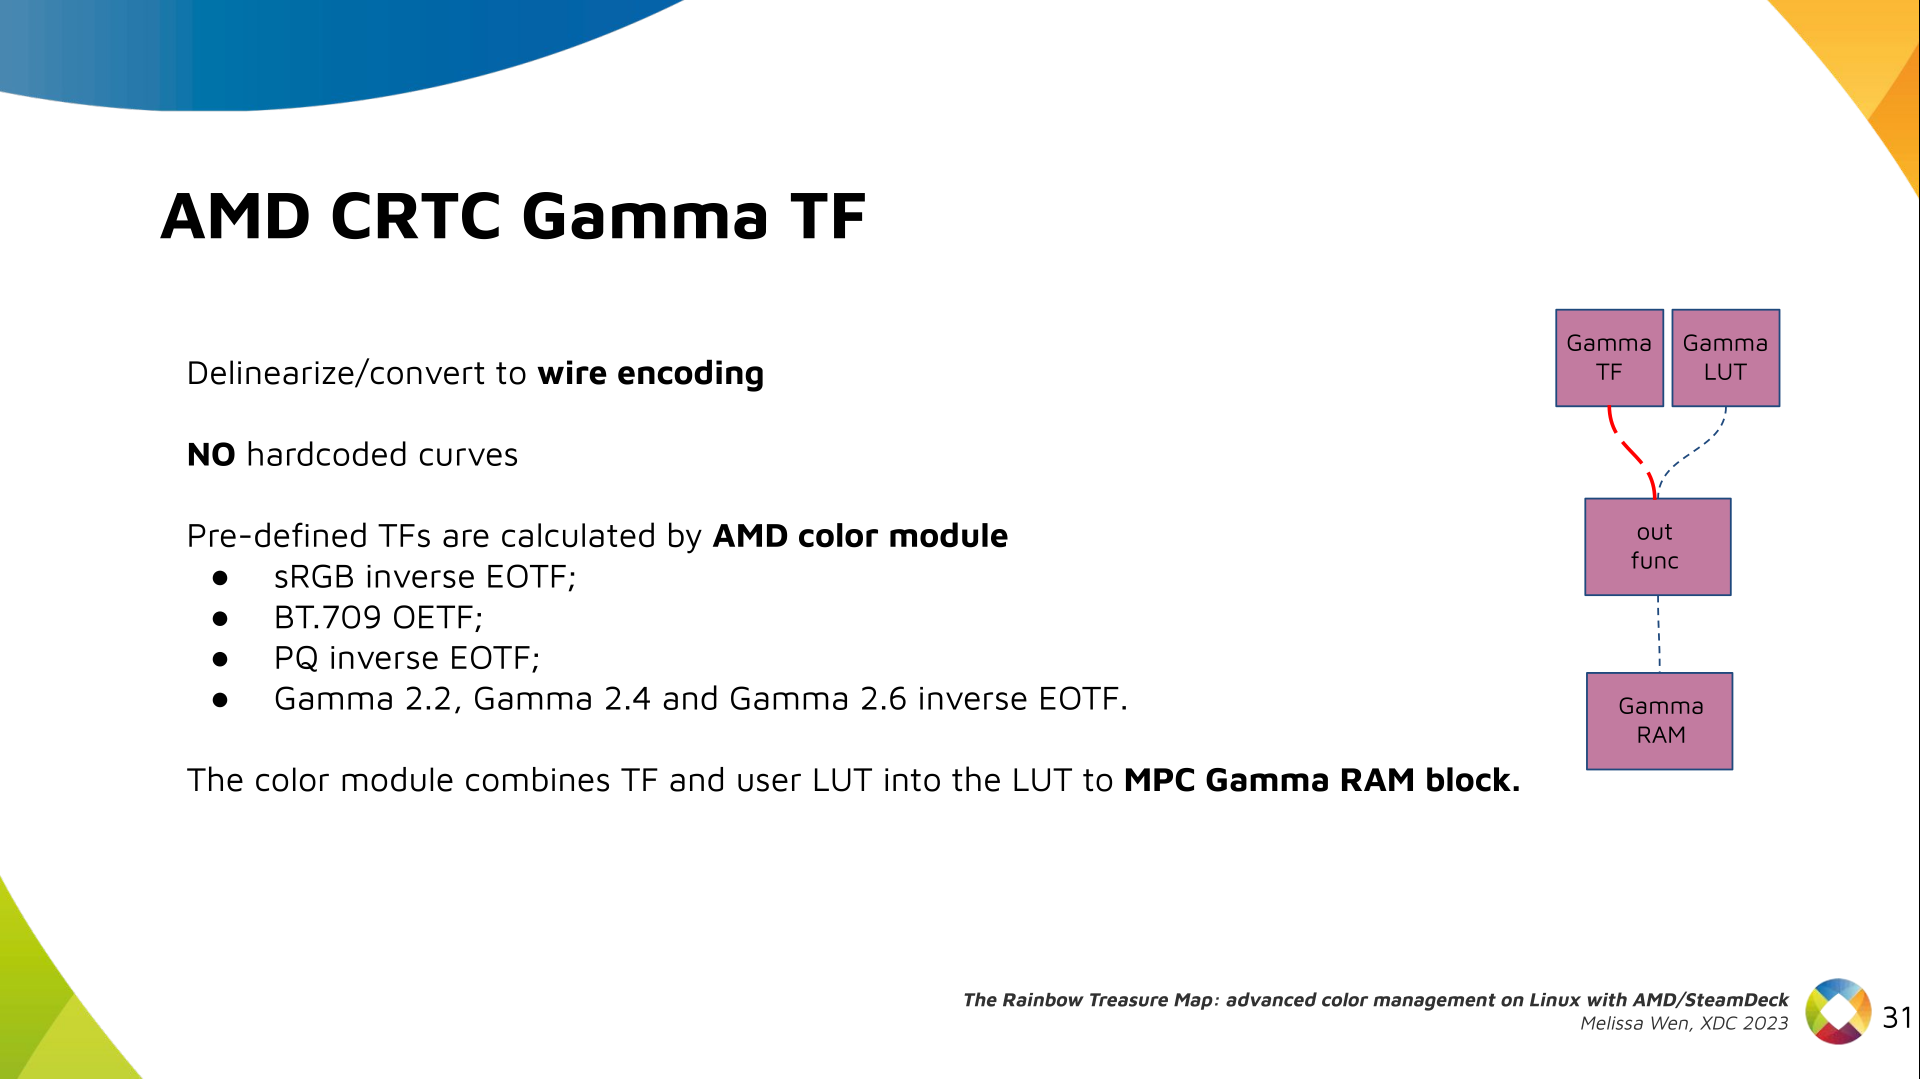 Slide 29: Describe CRTC gamma TF property and hardware capabilities